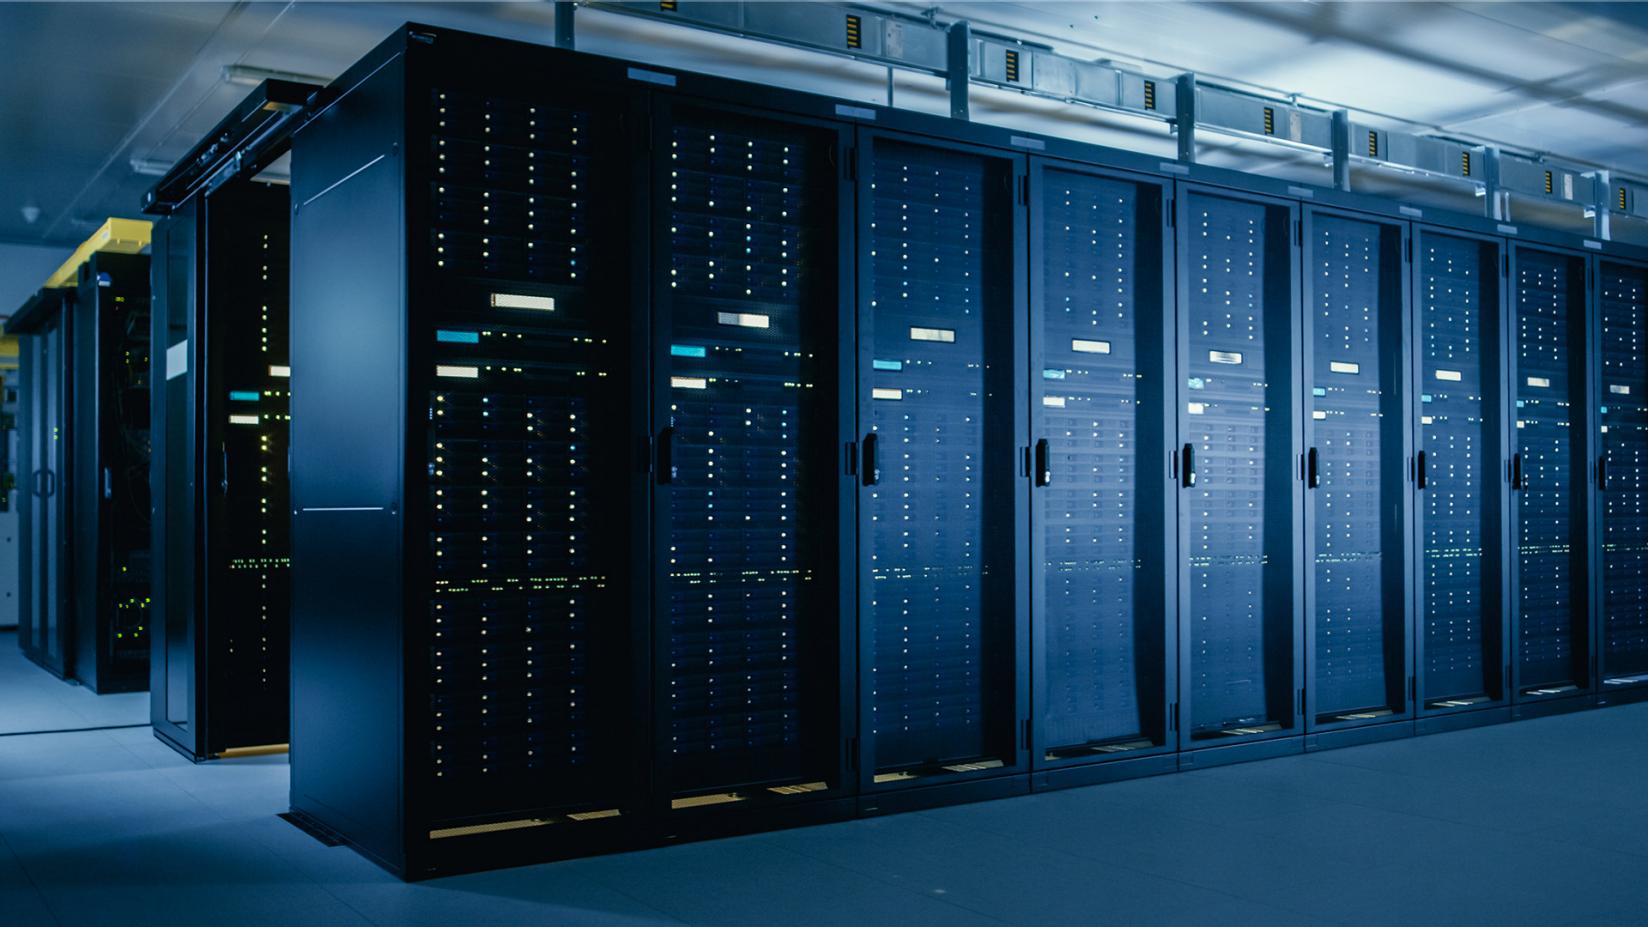 SiPearl supercomputing servers